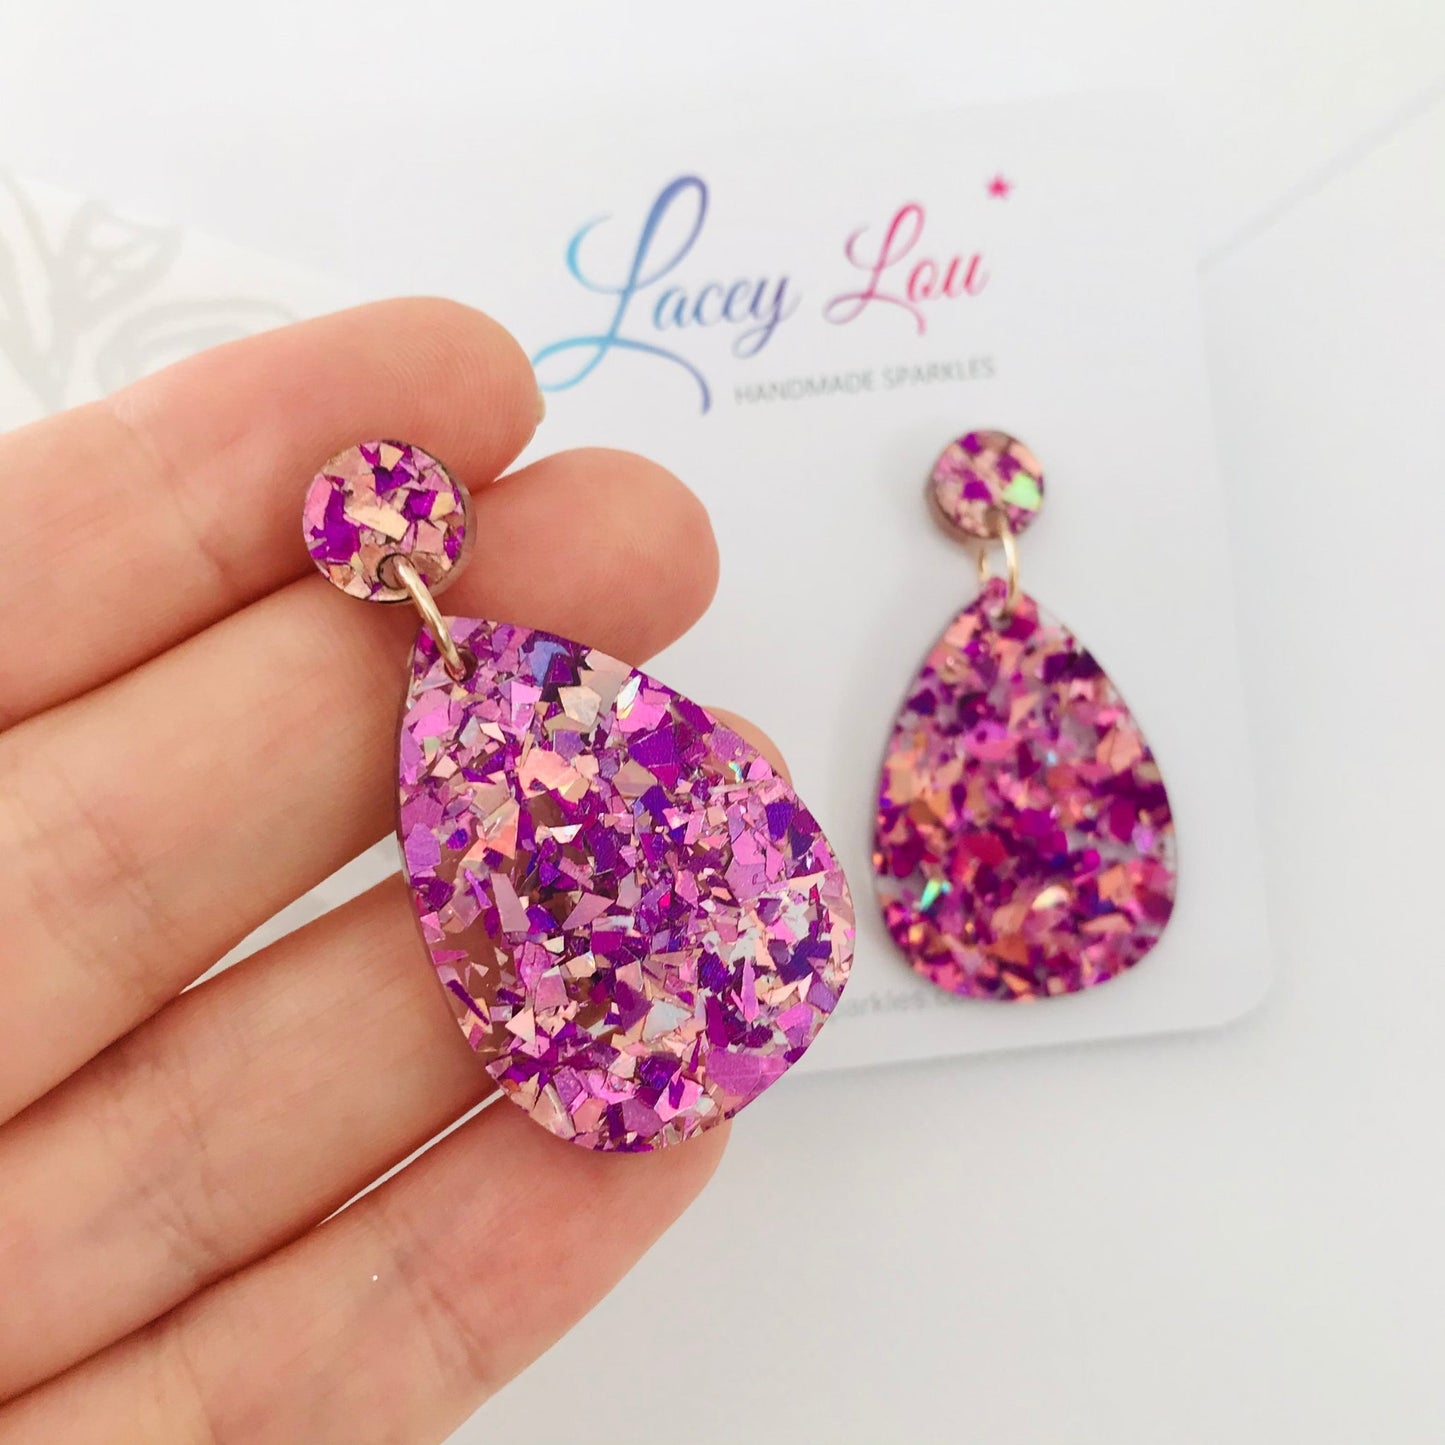 Medium Teardrop Dangle - Unicorn Pink Acrylic Earrings - Lacey Lou Sparkles